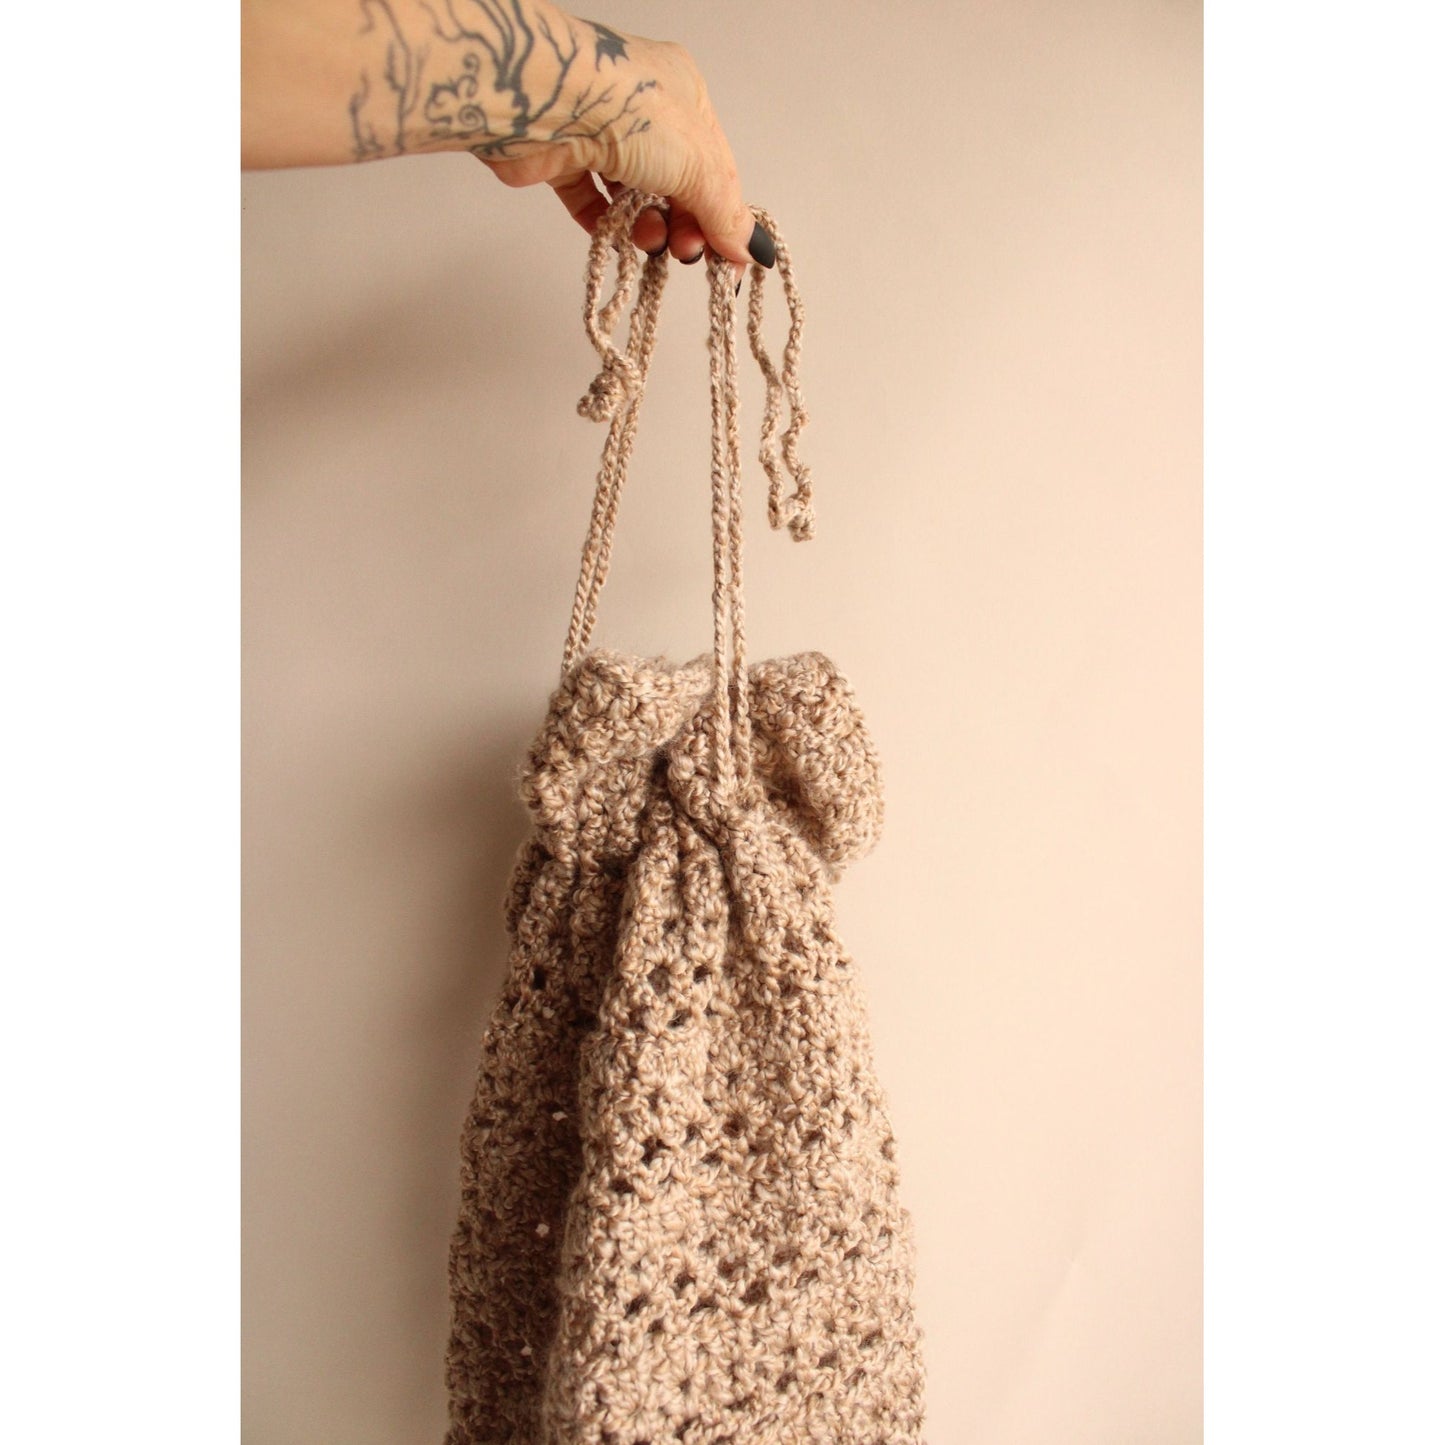 Vintage 1970s Taupe Knit Or Crochet Drawstring Bag